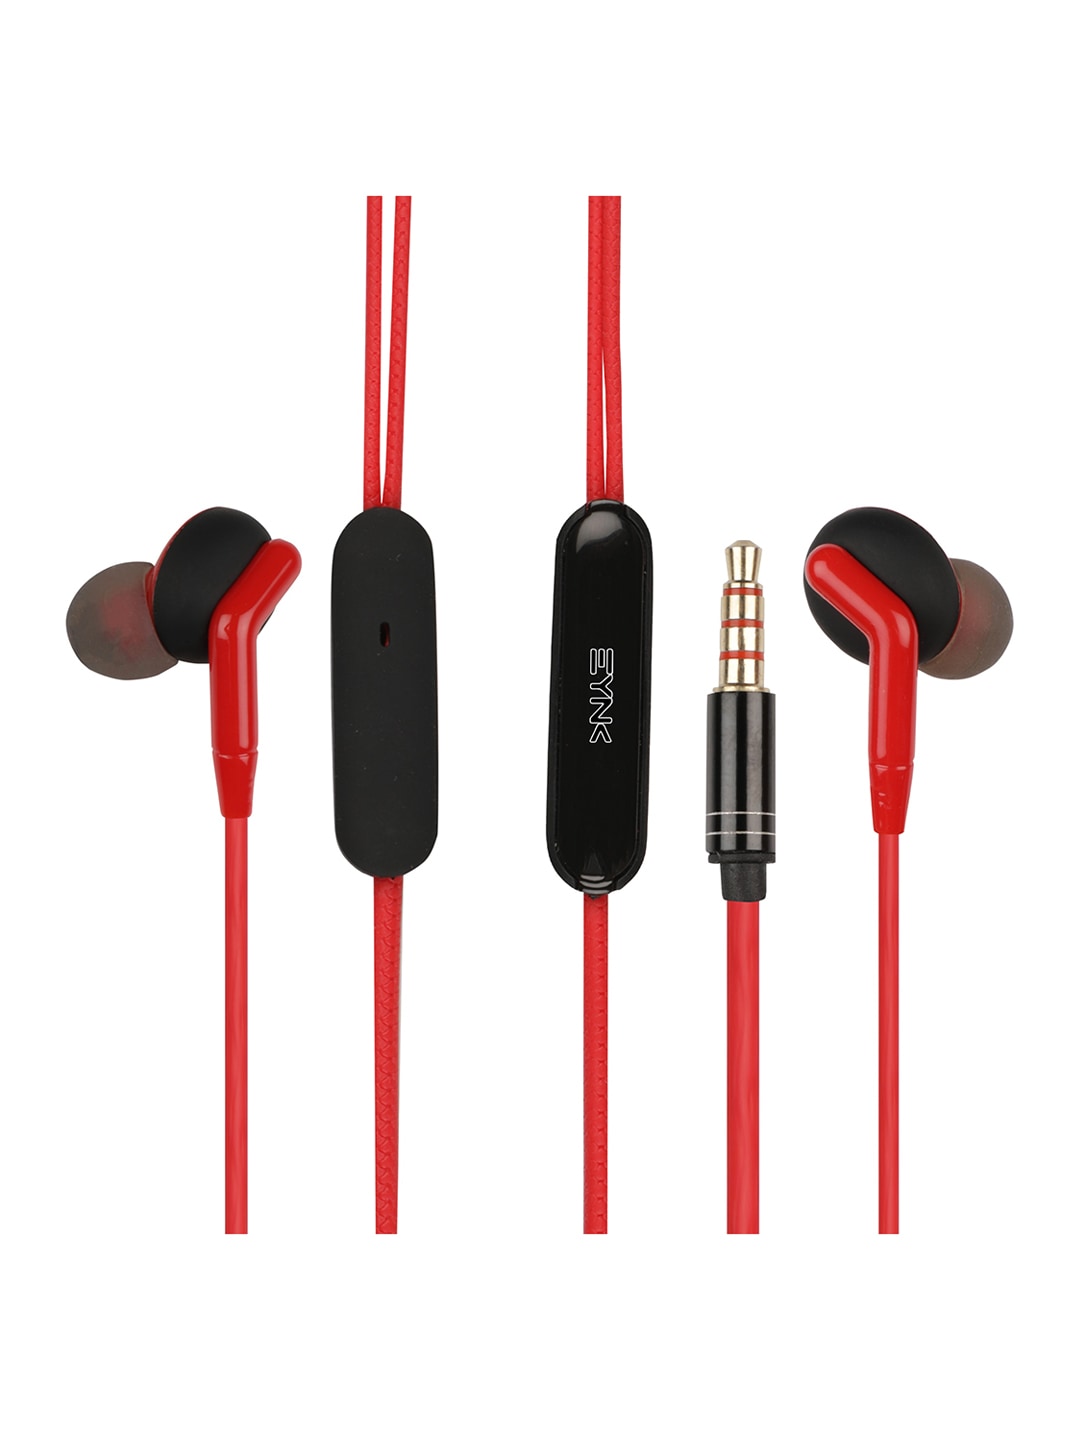 EYNK Red & Black Solid In-Ear Wired Earphones Price in India